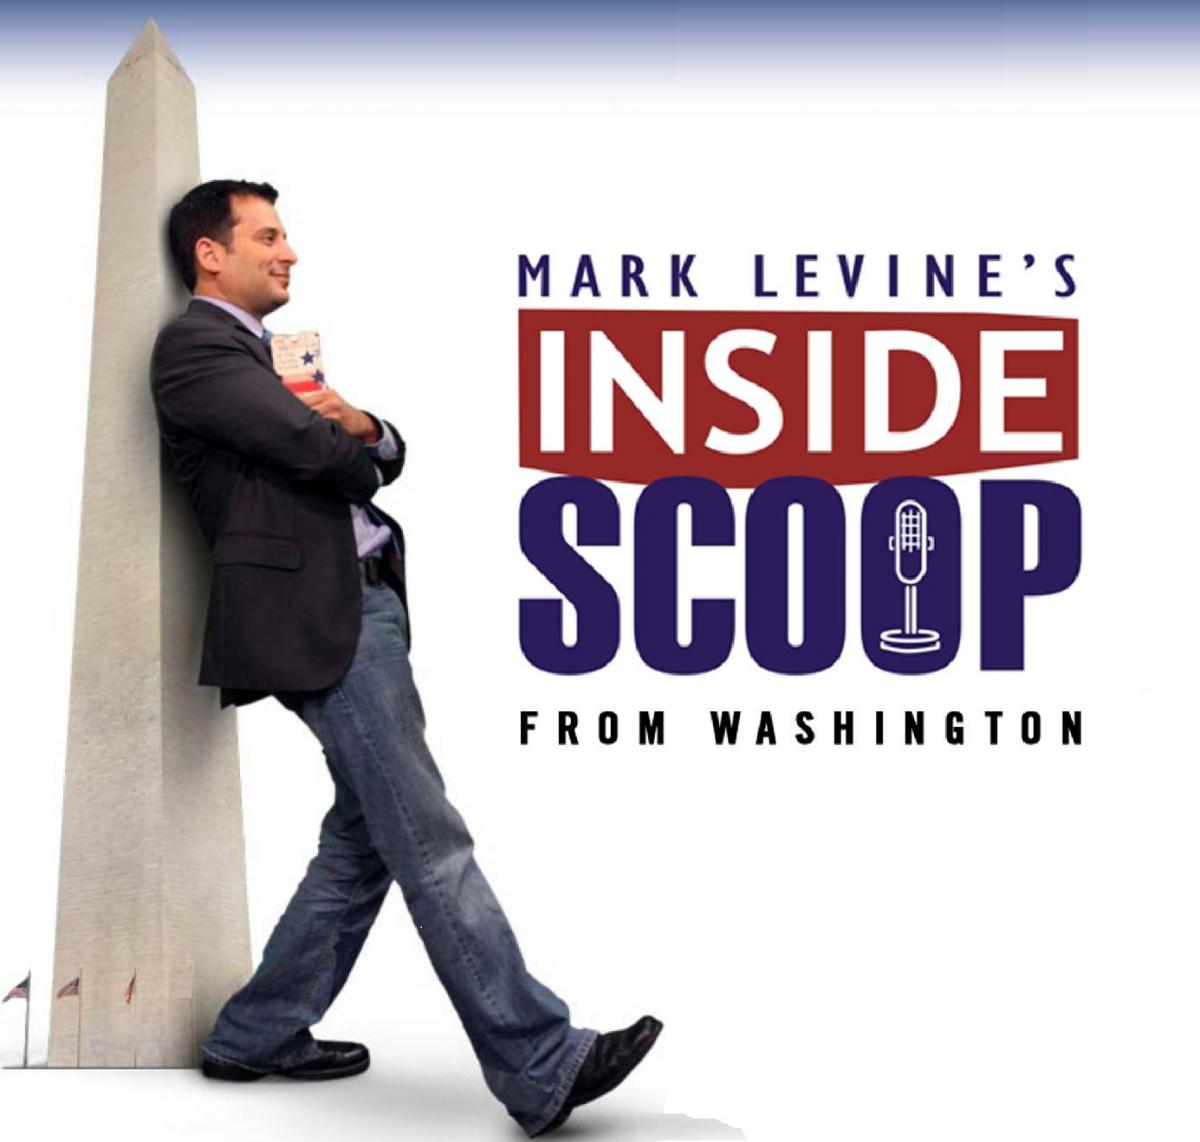 Mark Levine's Inside Scoop from Washington